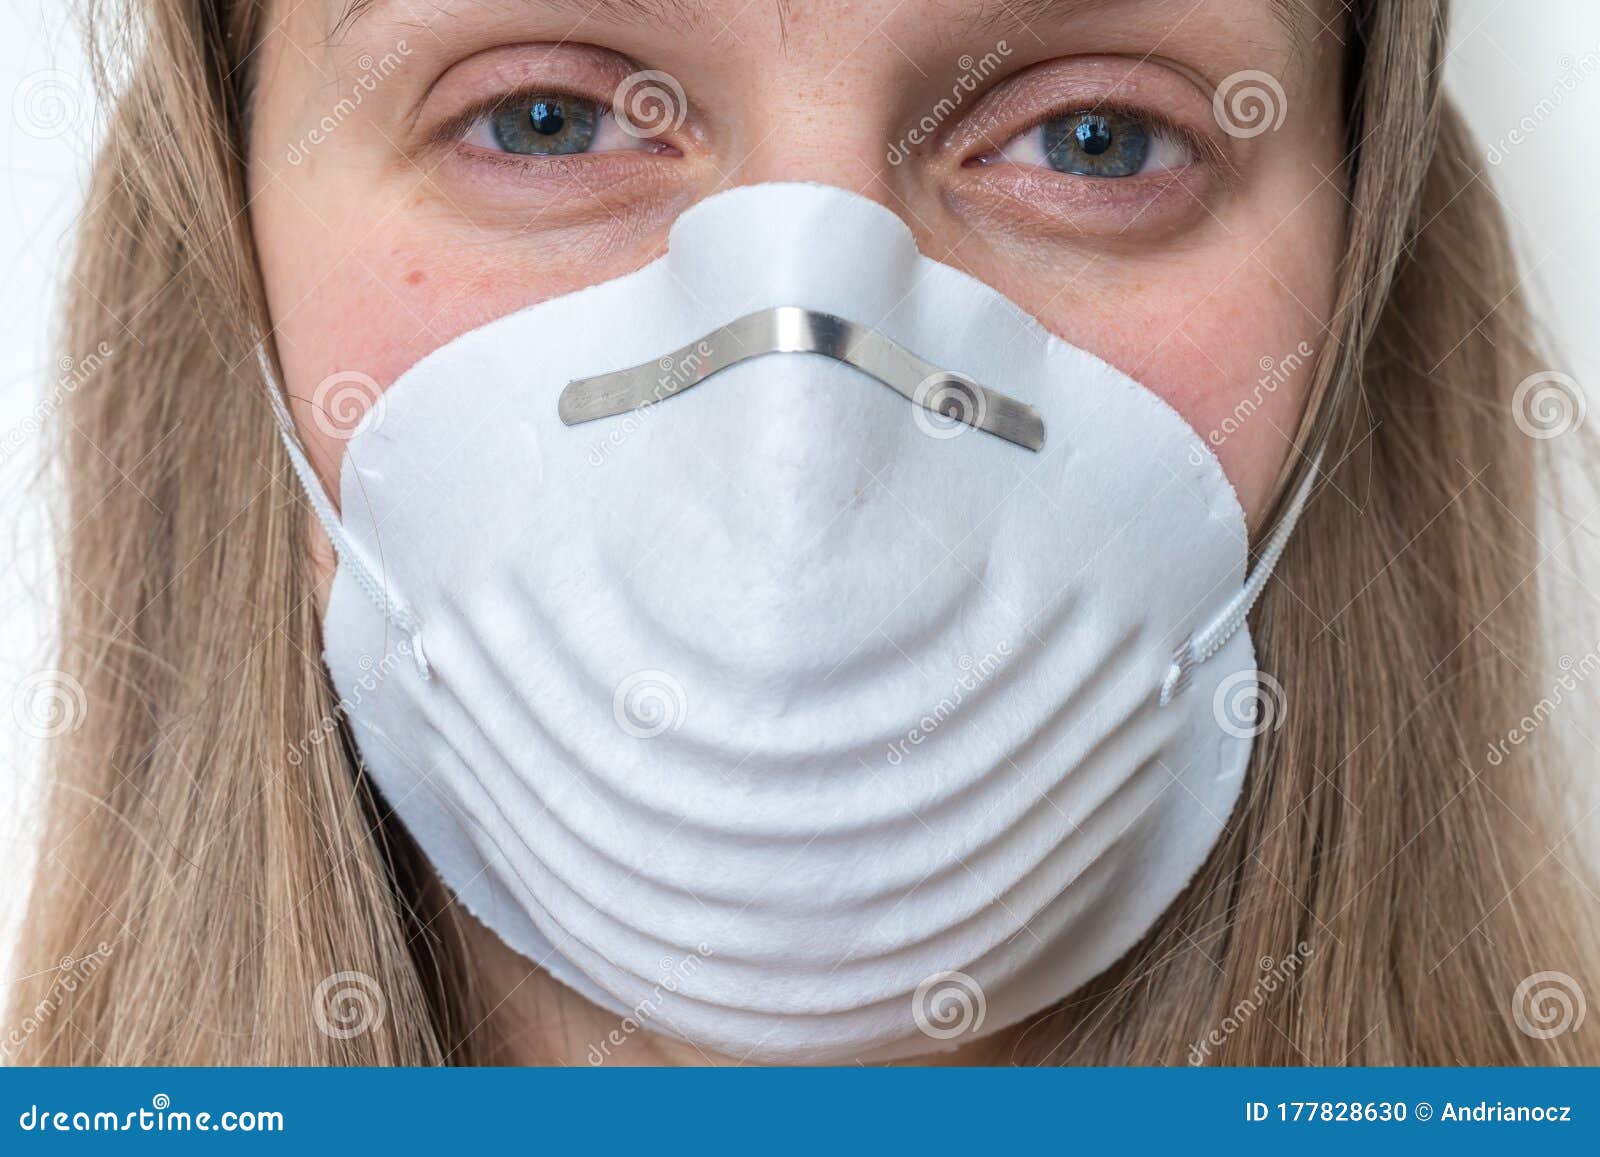 Woman with Respirator Mask - Coronavirus Concept Stock Photo - Image of ...